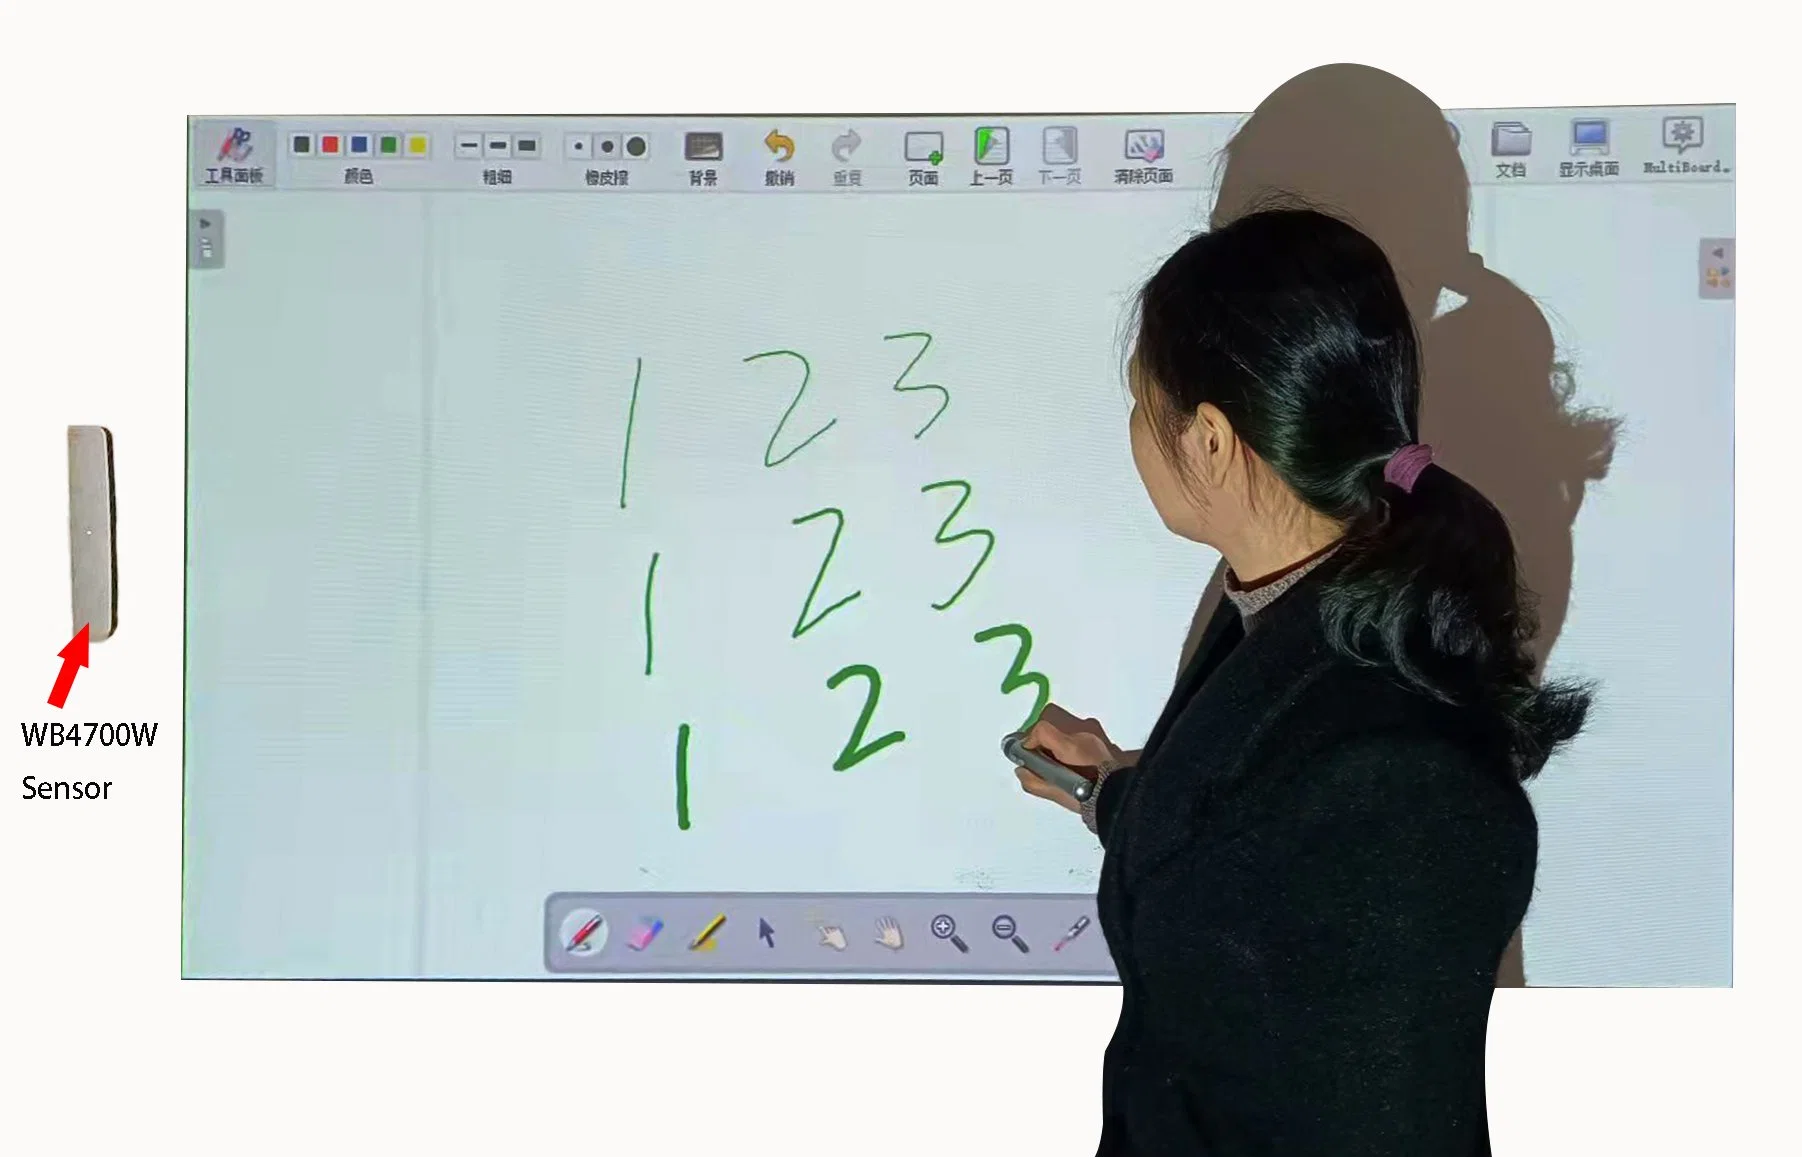 Oway Pizarra interactiva Business Meeting/Teaching Pizarra táctil pantalla táctil Electrónica ultrasónica Pluma